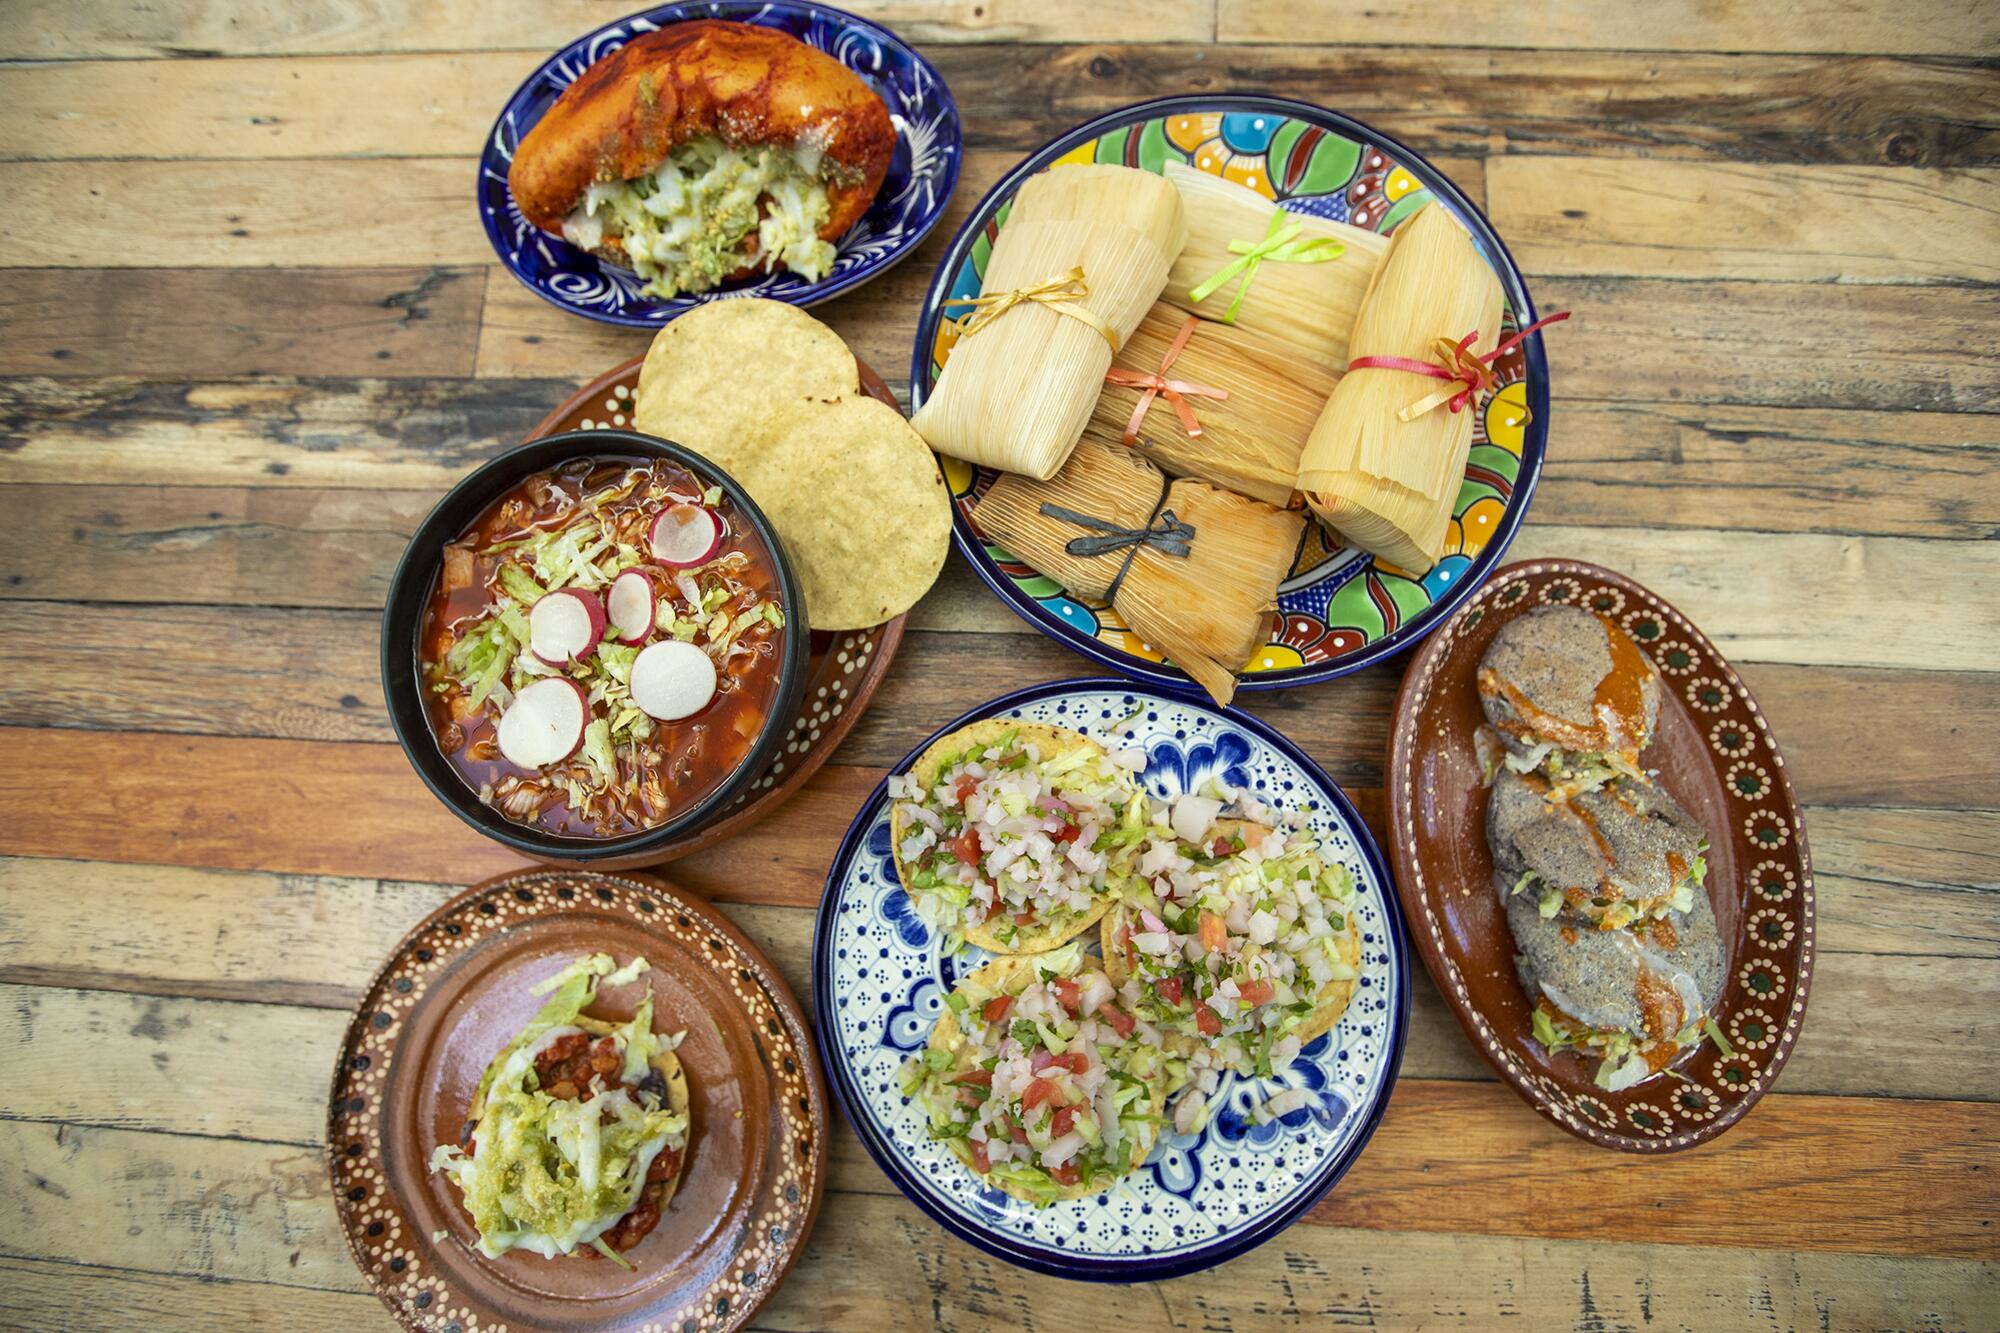 An assortment of vegan Mexican food from La Vegana Mexicana in Santa Ana.